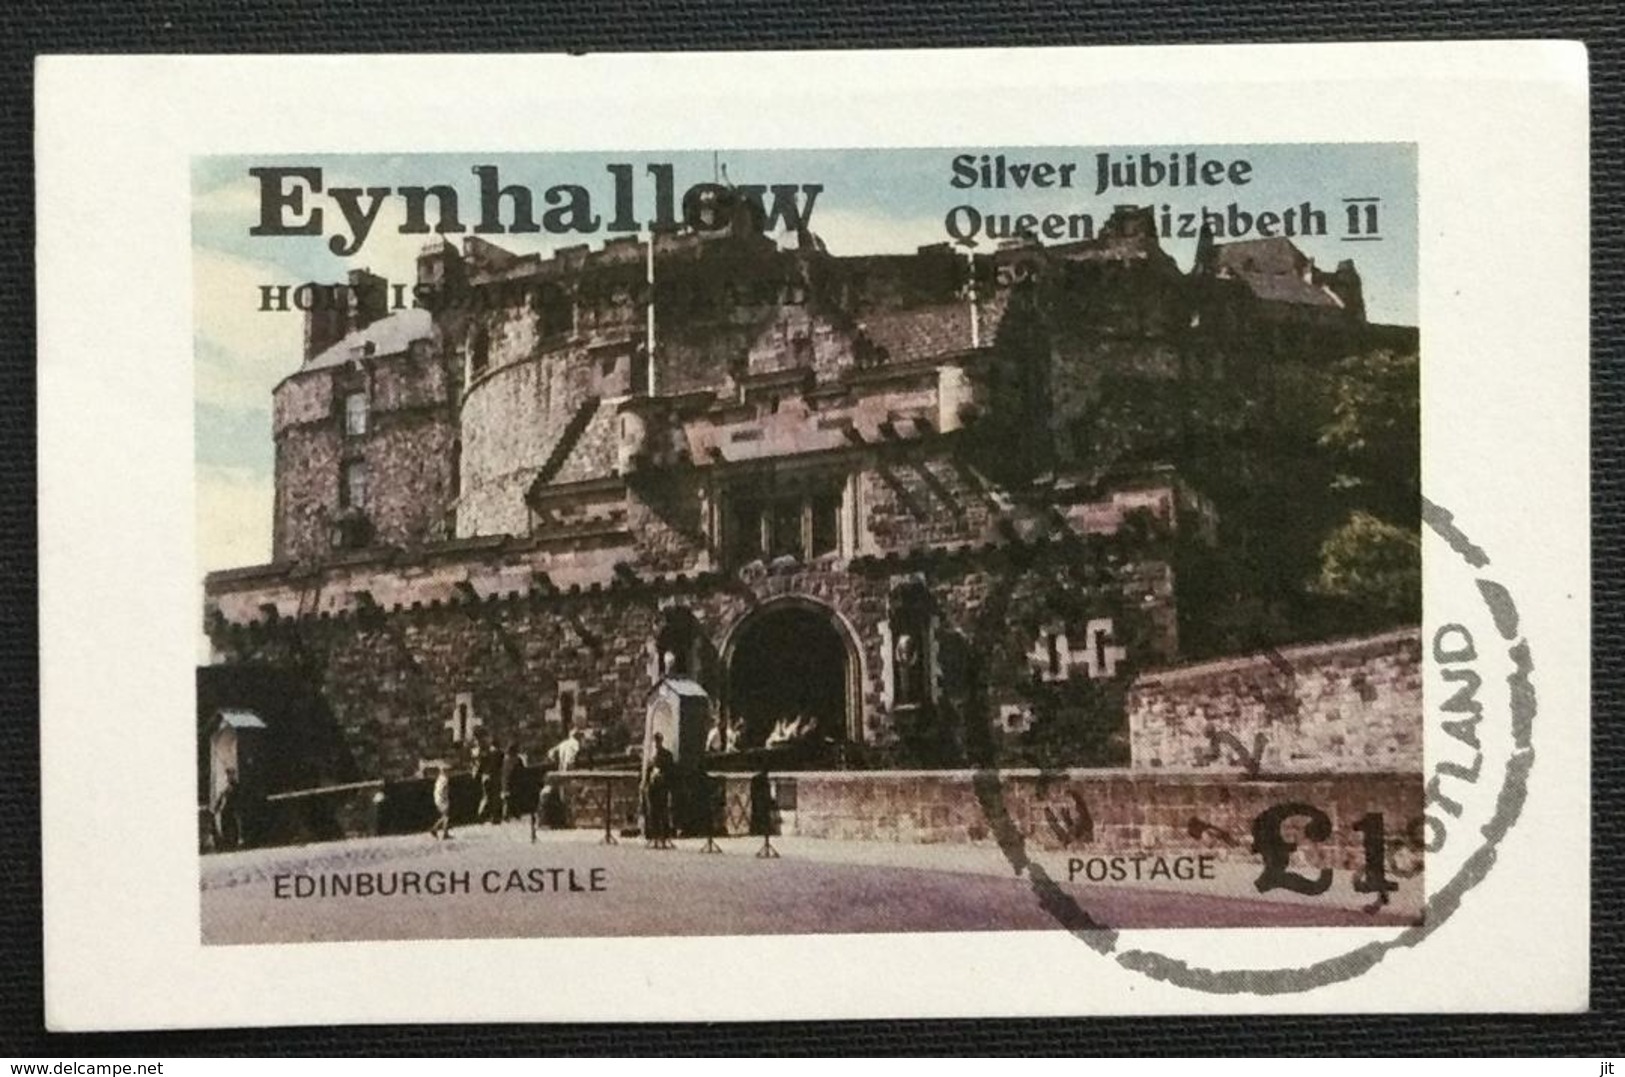 134.EYNHALLOW HOLY ISLAND SCOTLAND 1977 USED STAMP SILVER JUBILEE QUEEN ELIZABETH II, EDINBURGH CASTLE. - Local Issues